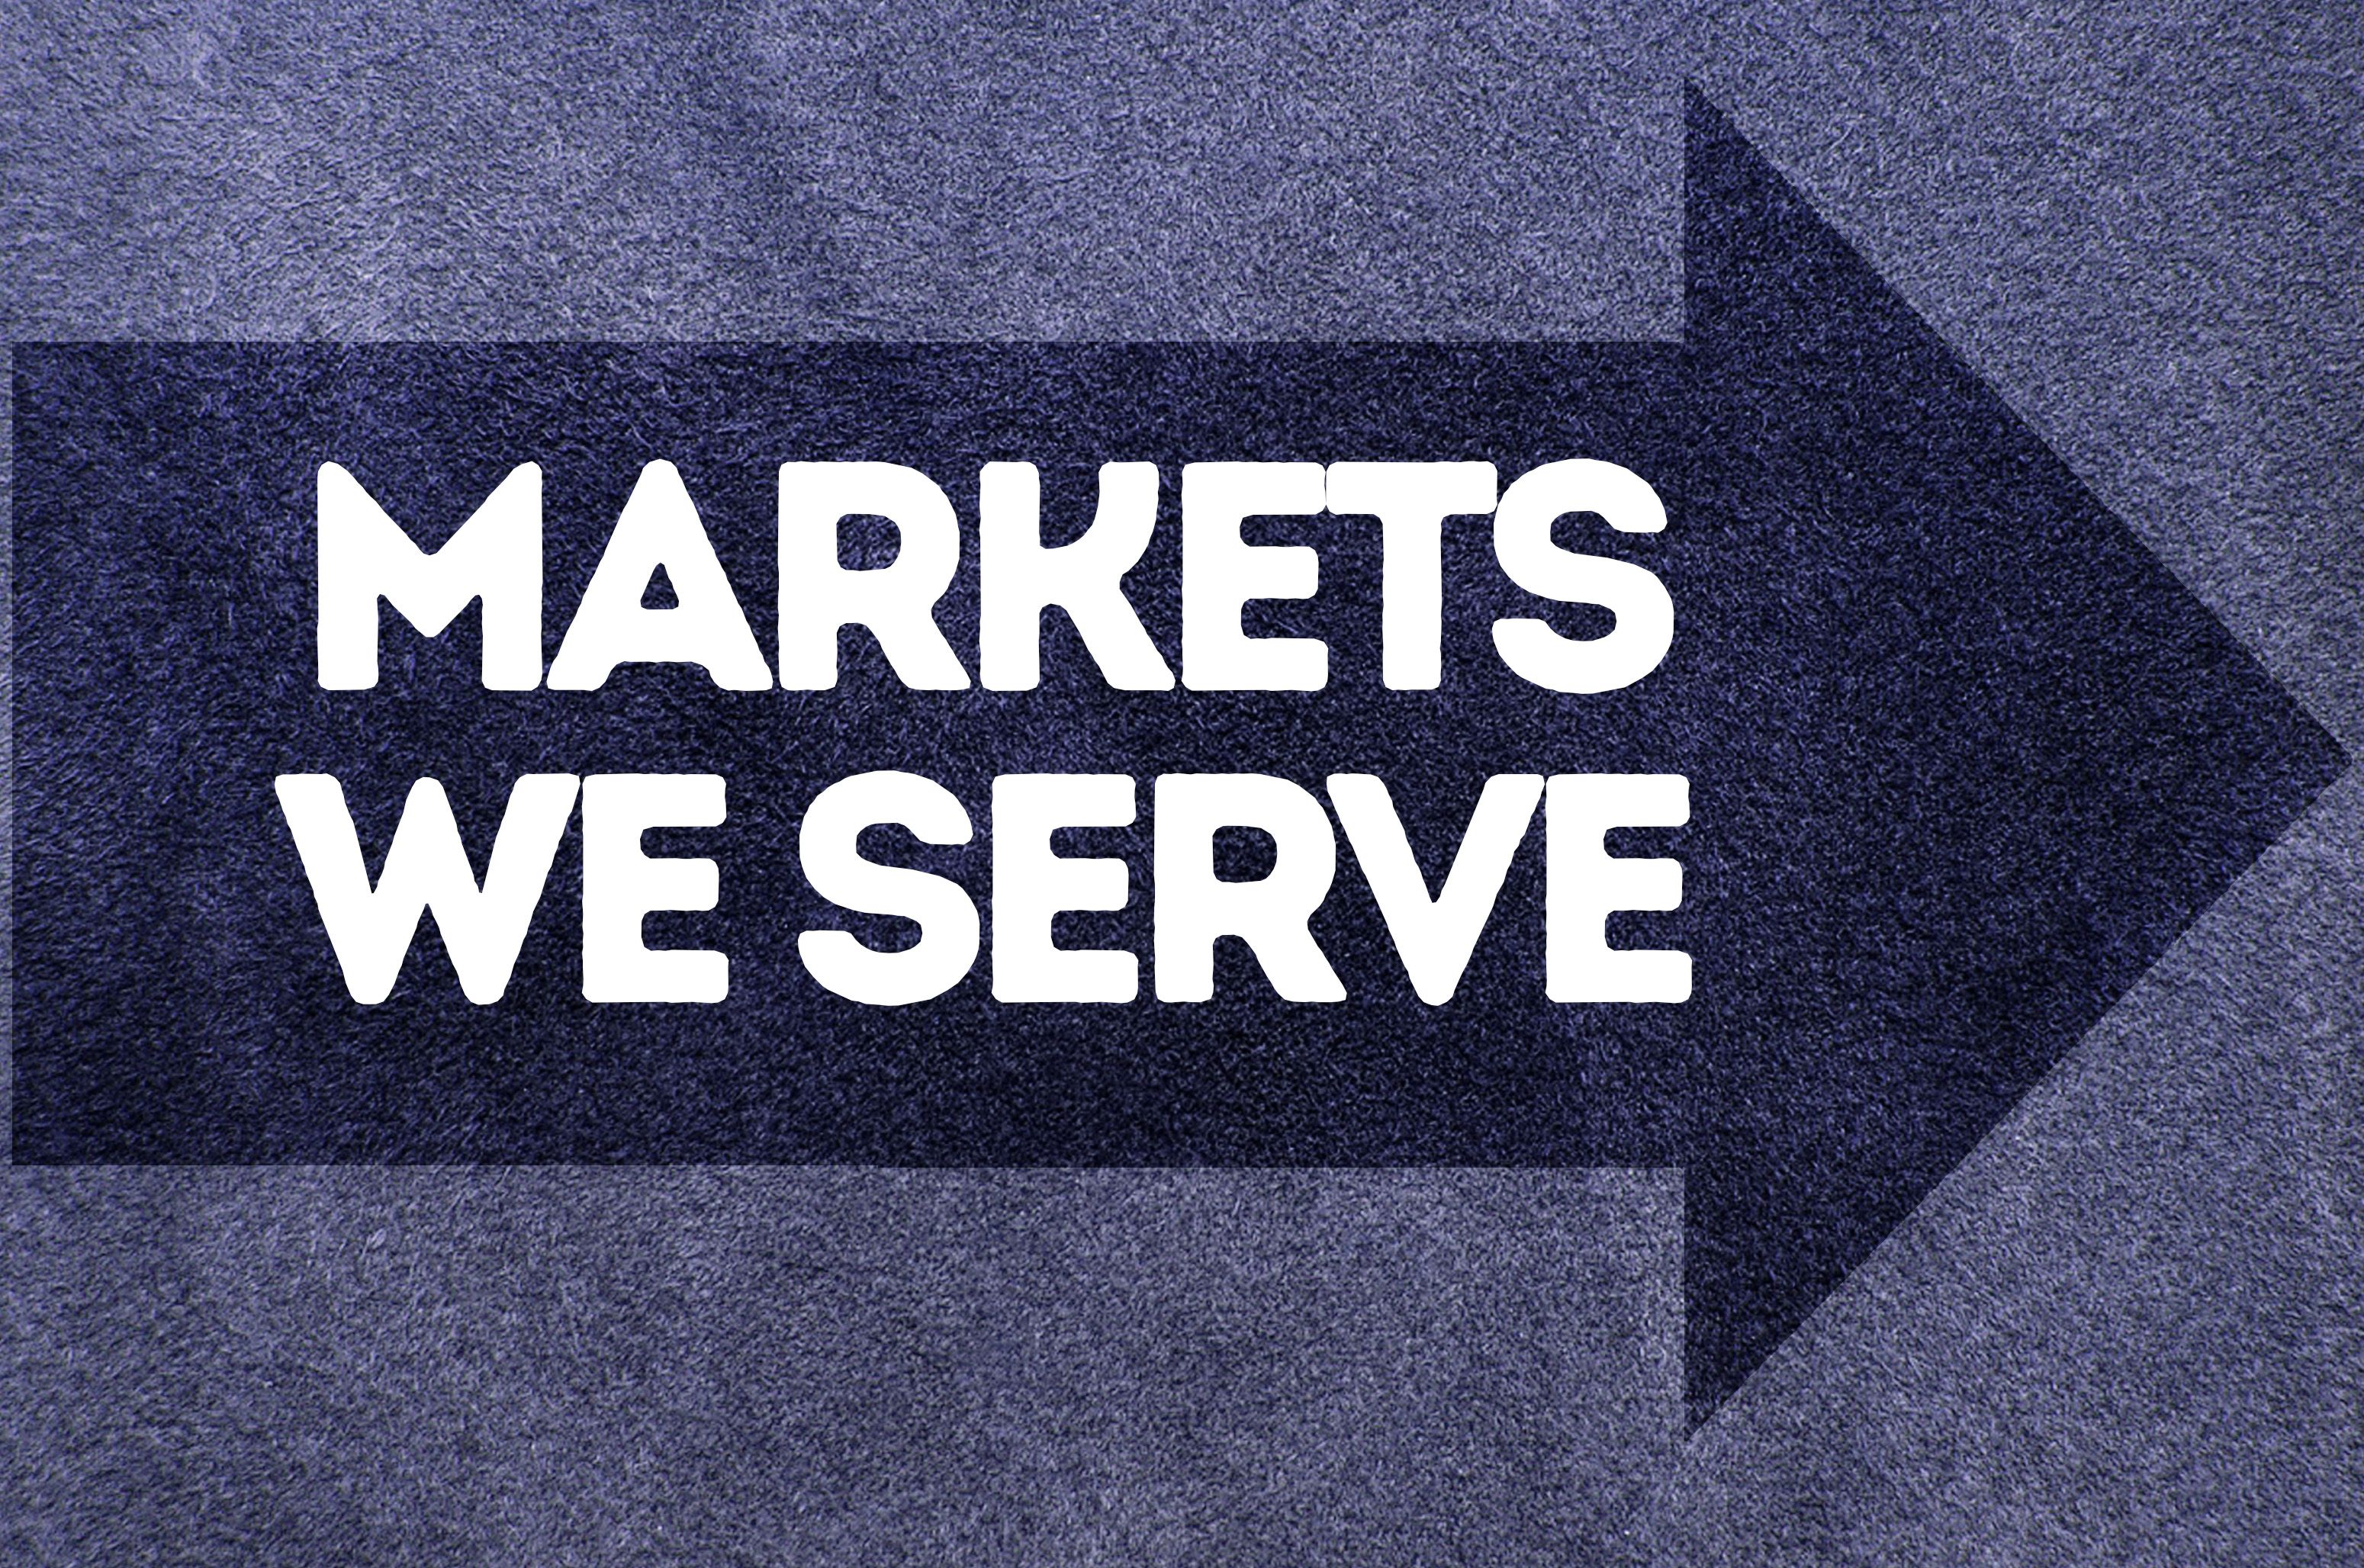 Markets We Serve